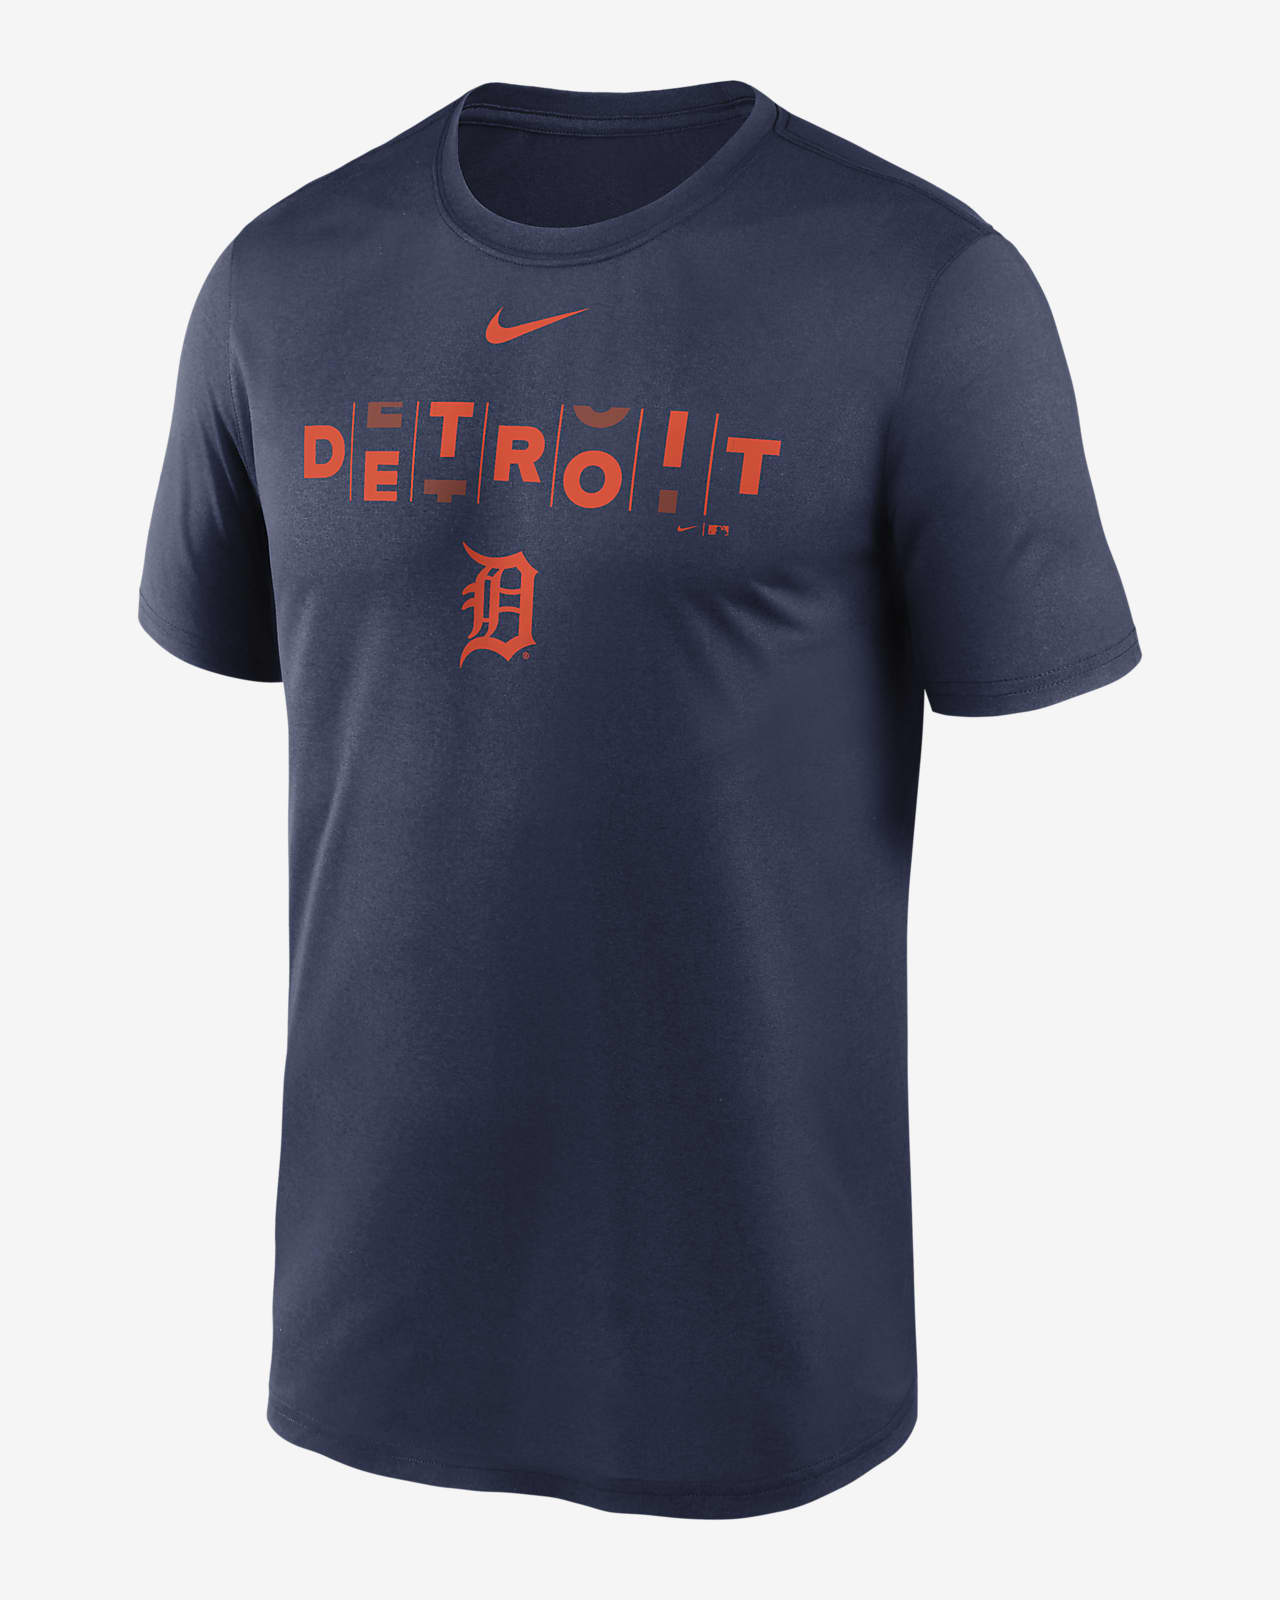 Nike, Shirts, Detroit Tigers Nike Dri Fit Athletic Tee